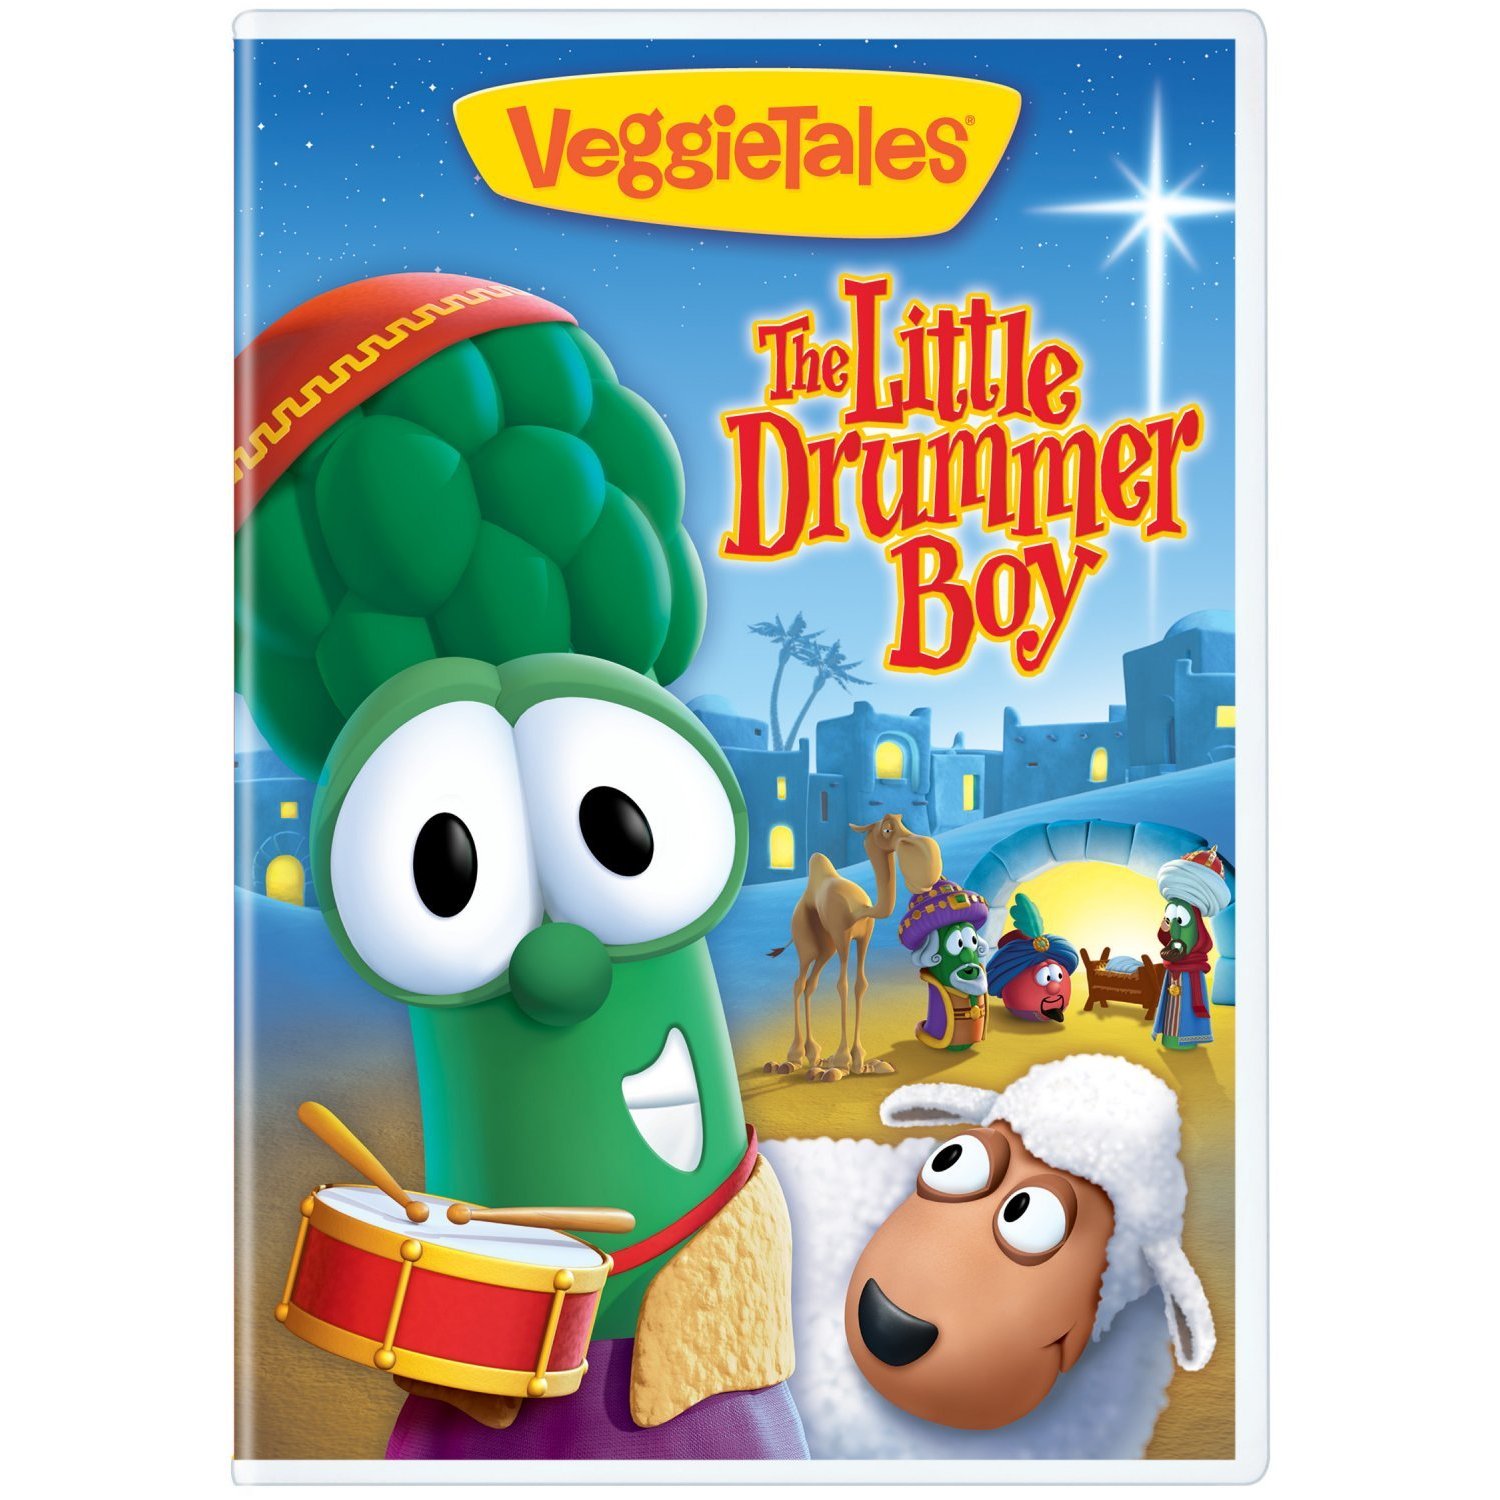 VeggieTales Little Drummer Boy DVD: Winner.